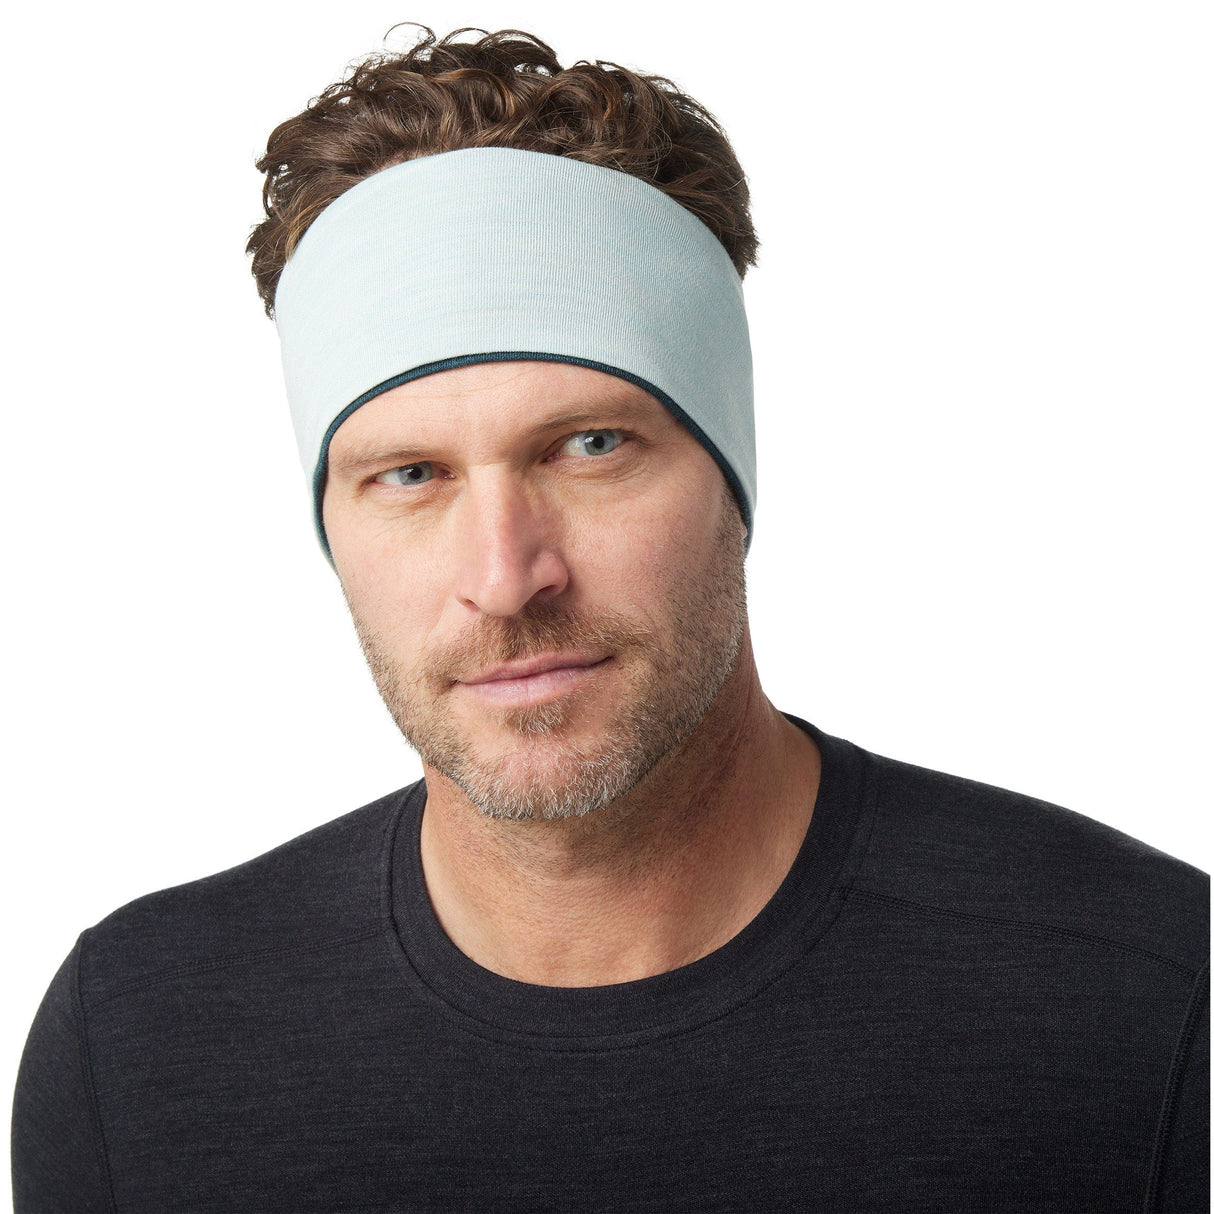 Smartwool Thermal Merino Reversible Headband  - 